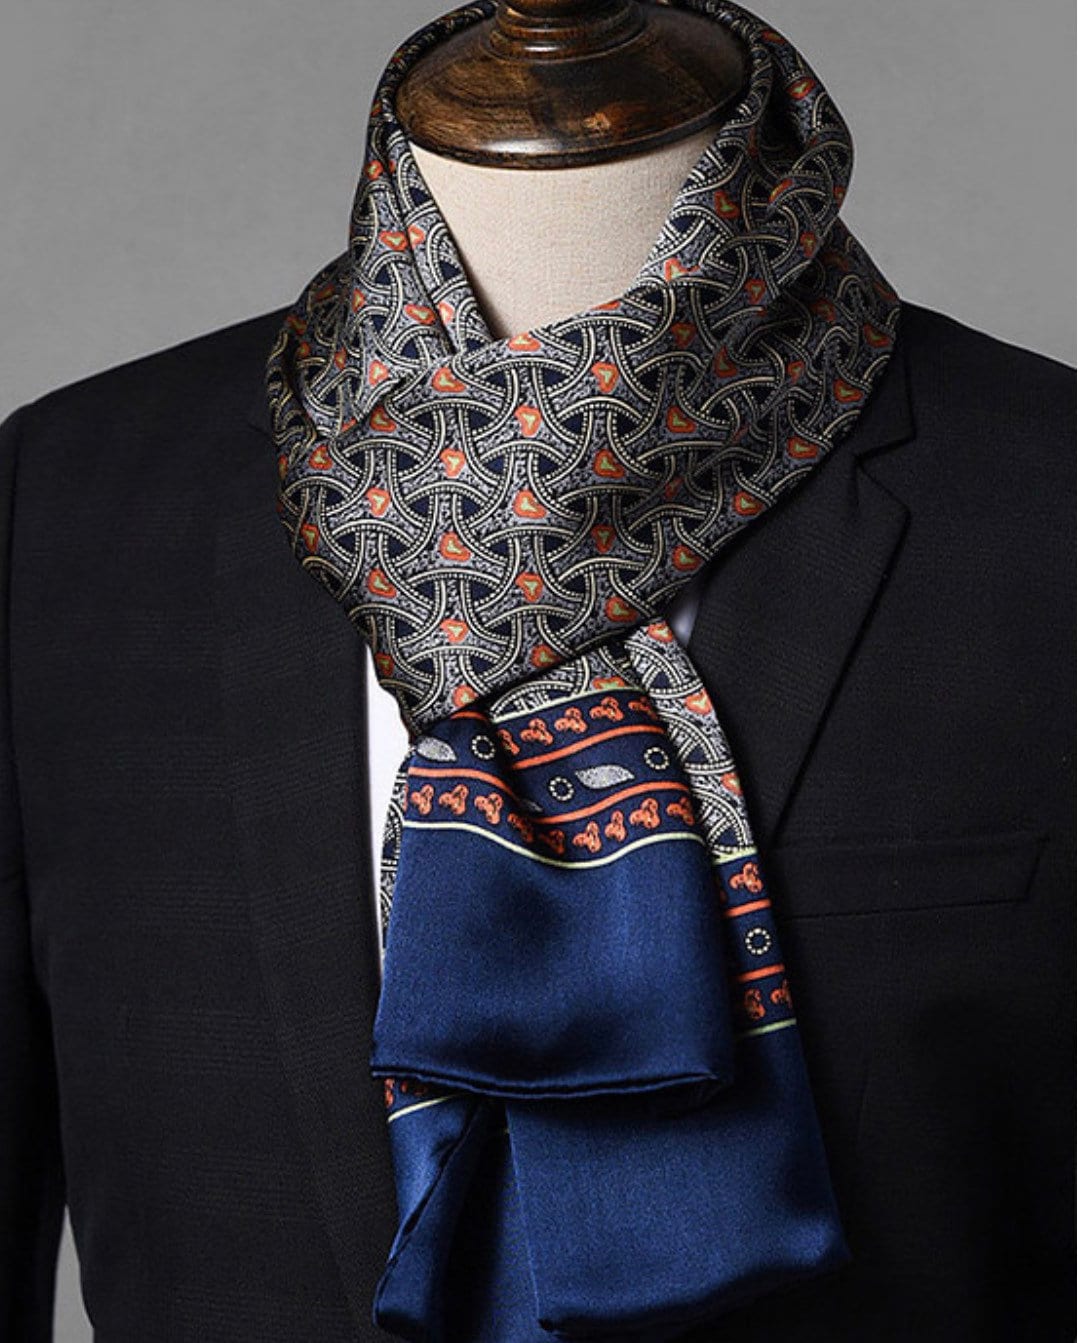 HamzahSilkScarves Mens Silk Scarf, Wrap Scarf for Him, Elegant Foulard with Floral Pattern, Navy Blue Scarf Men, 71x26 inch Large Scarves, Unique Gift for Him